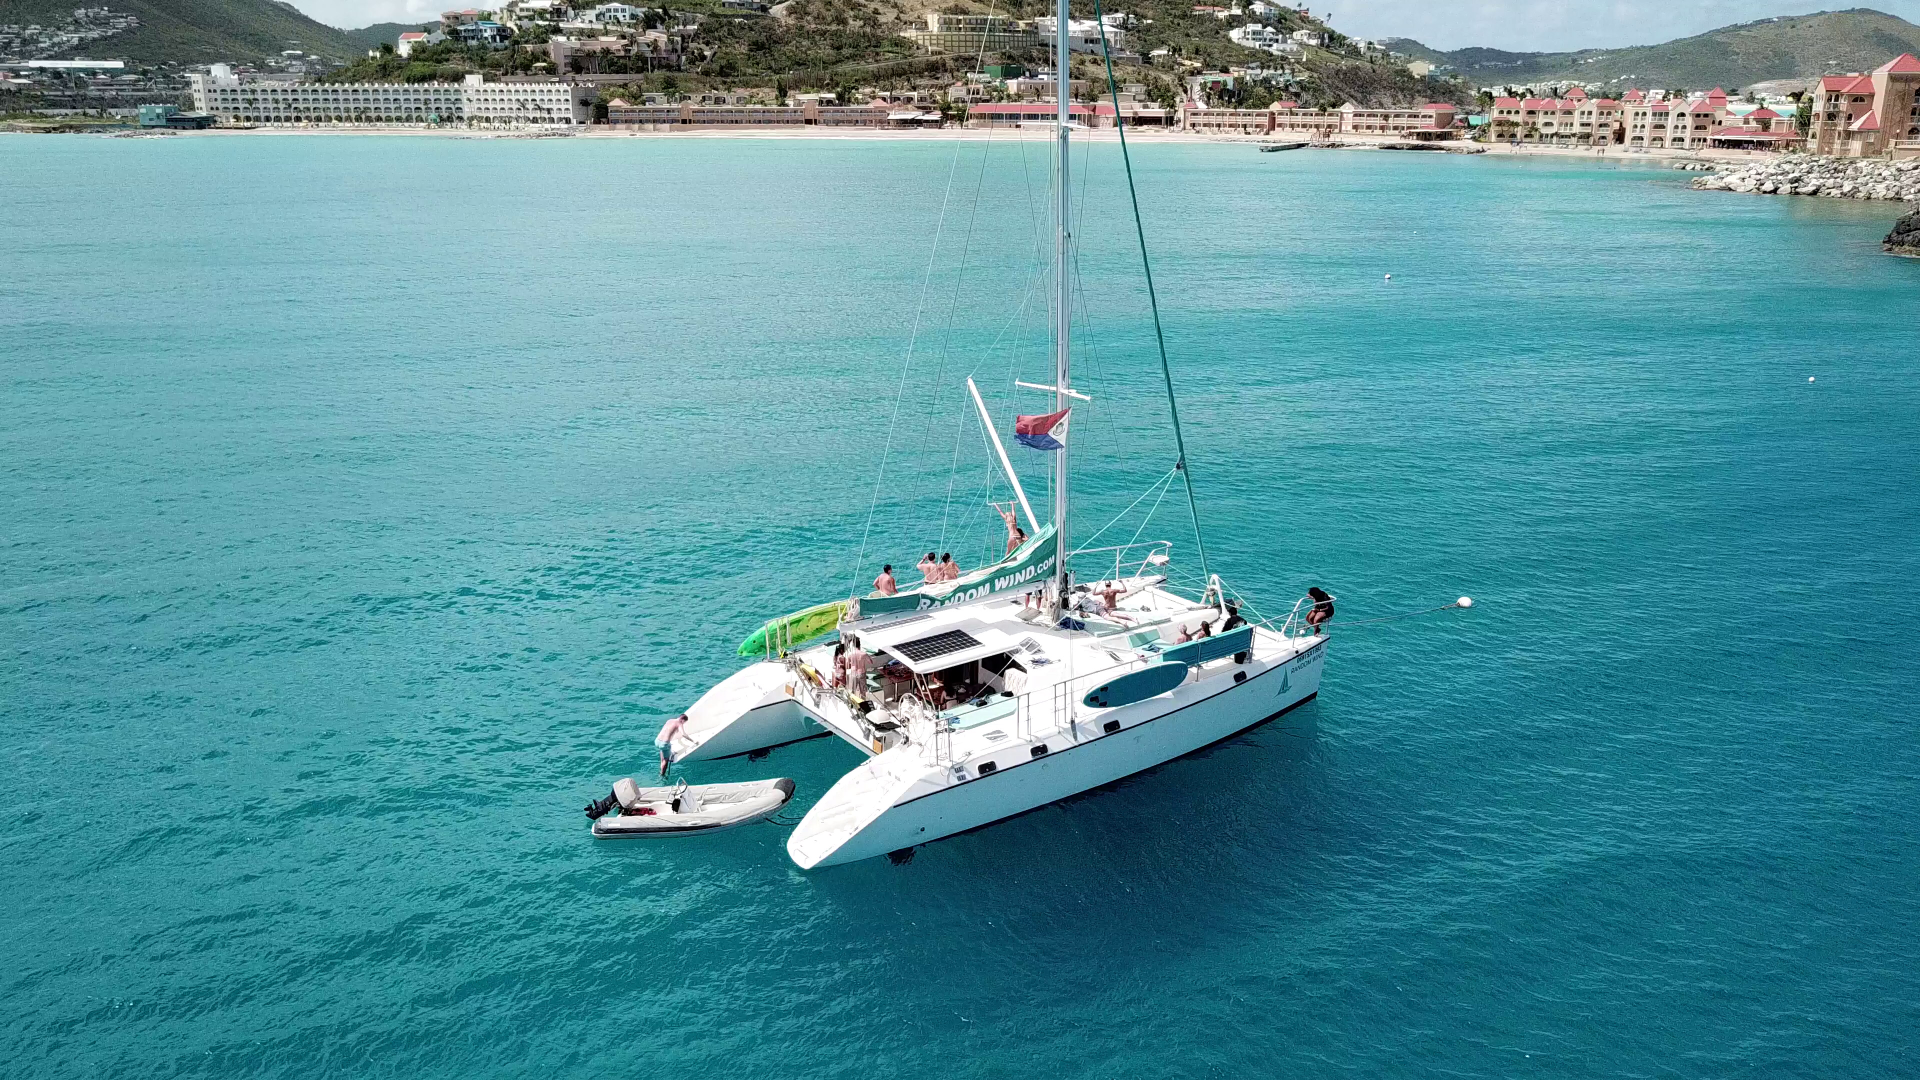 Random Wind Yacht Catamaran anchored in St Maarten